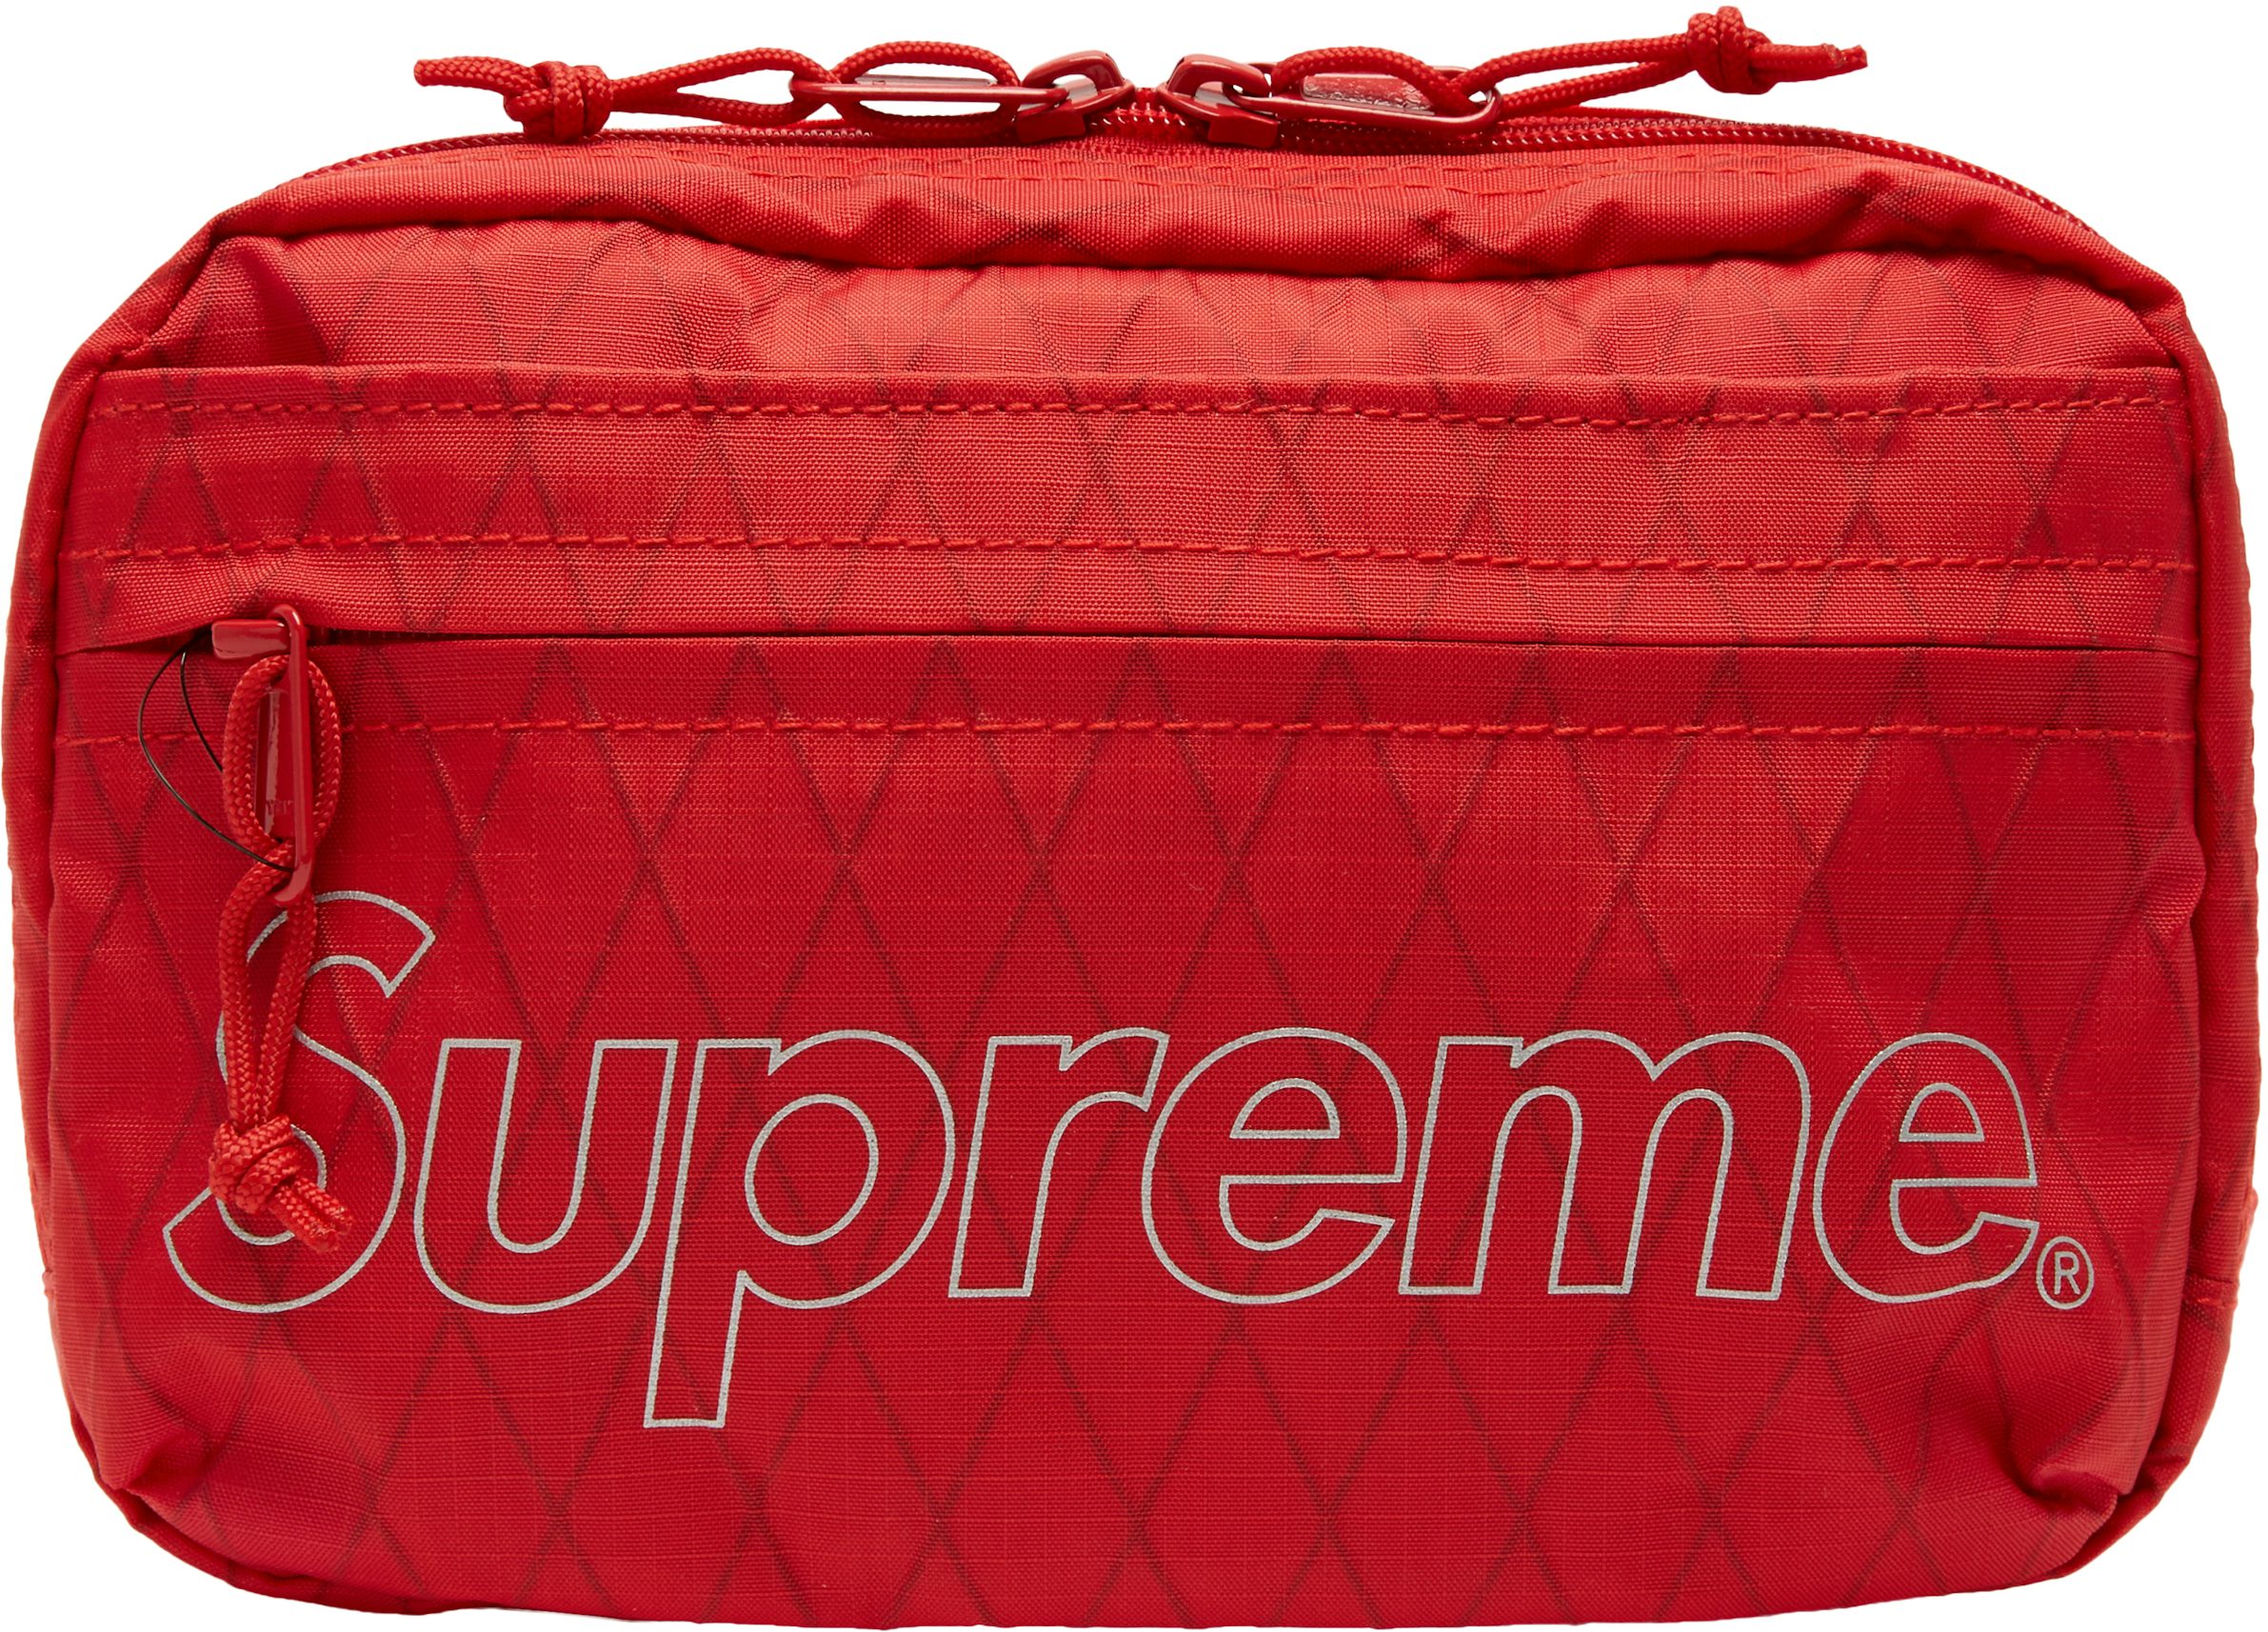 Supreme Duffle Bag Black (FW18) - 100% Authentic